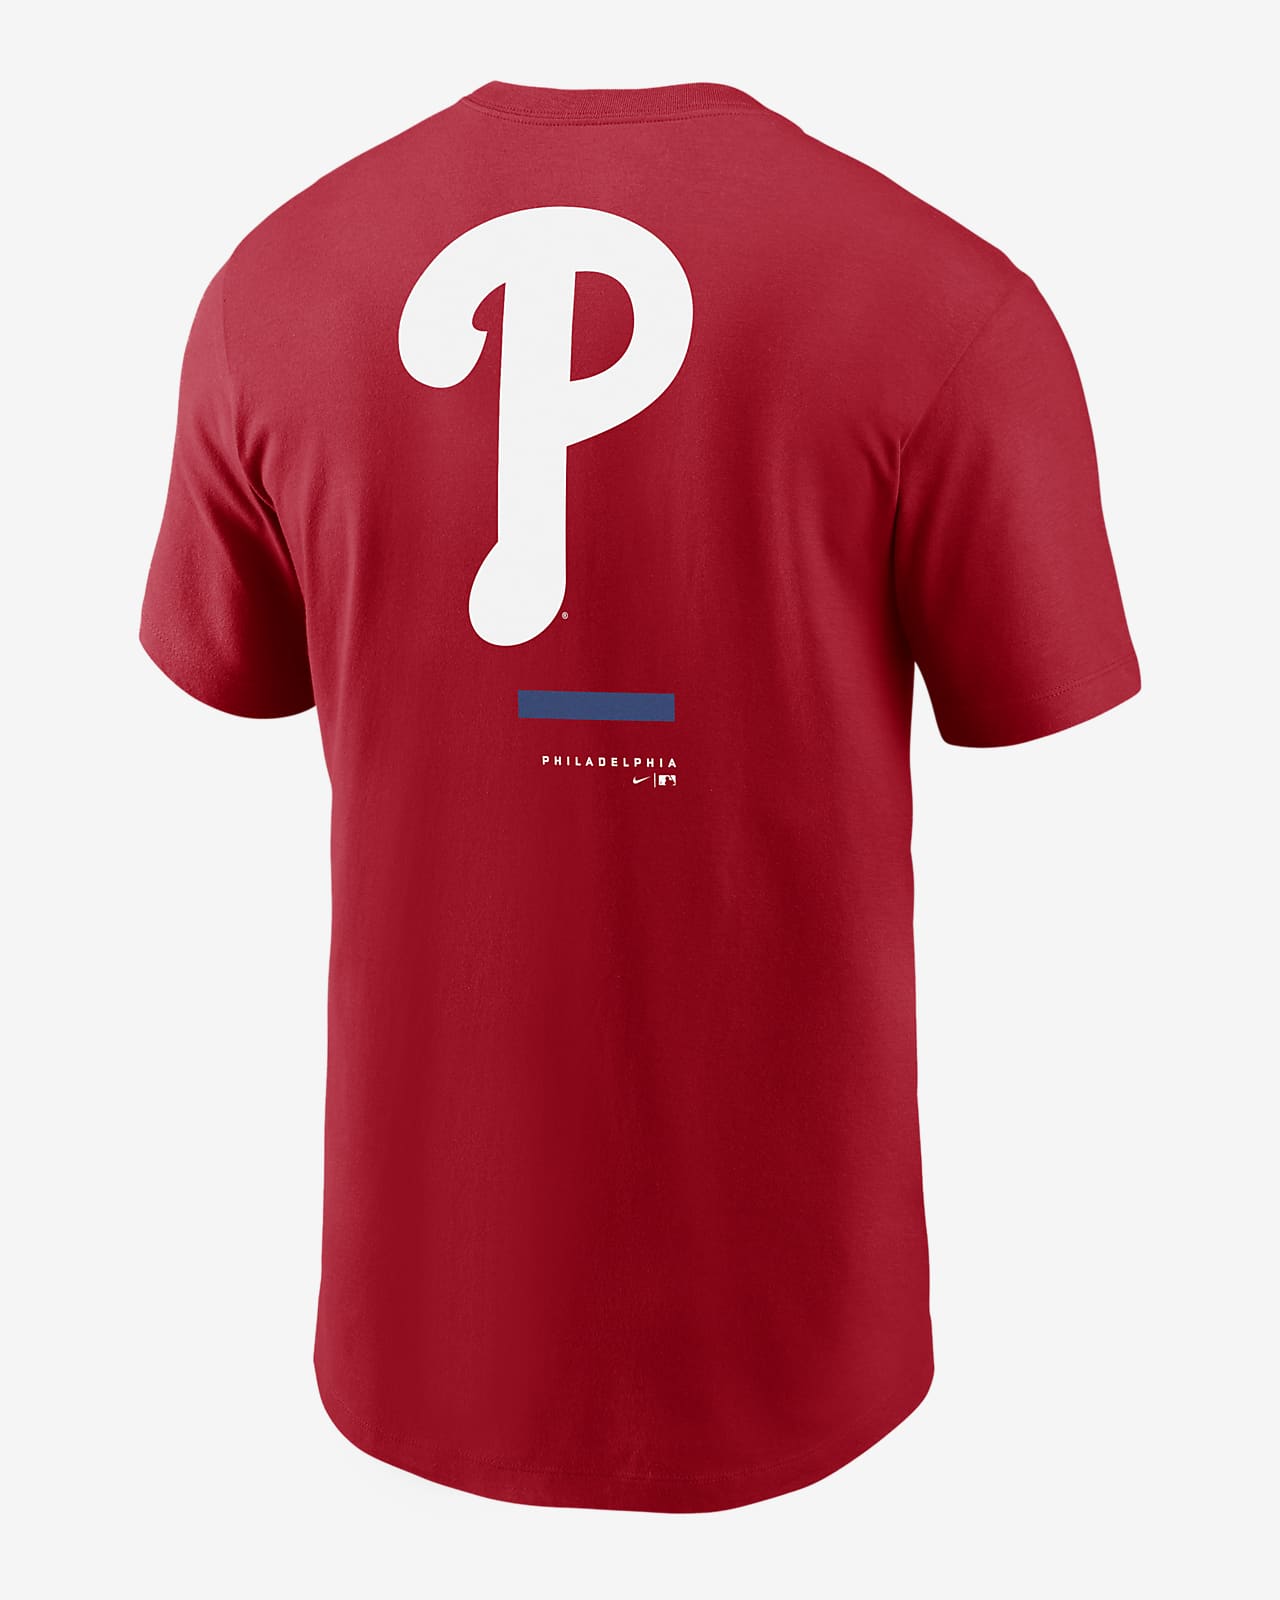 Phillies MLB Red Jersey Shirt 